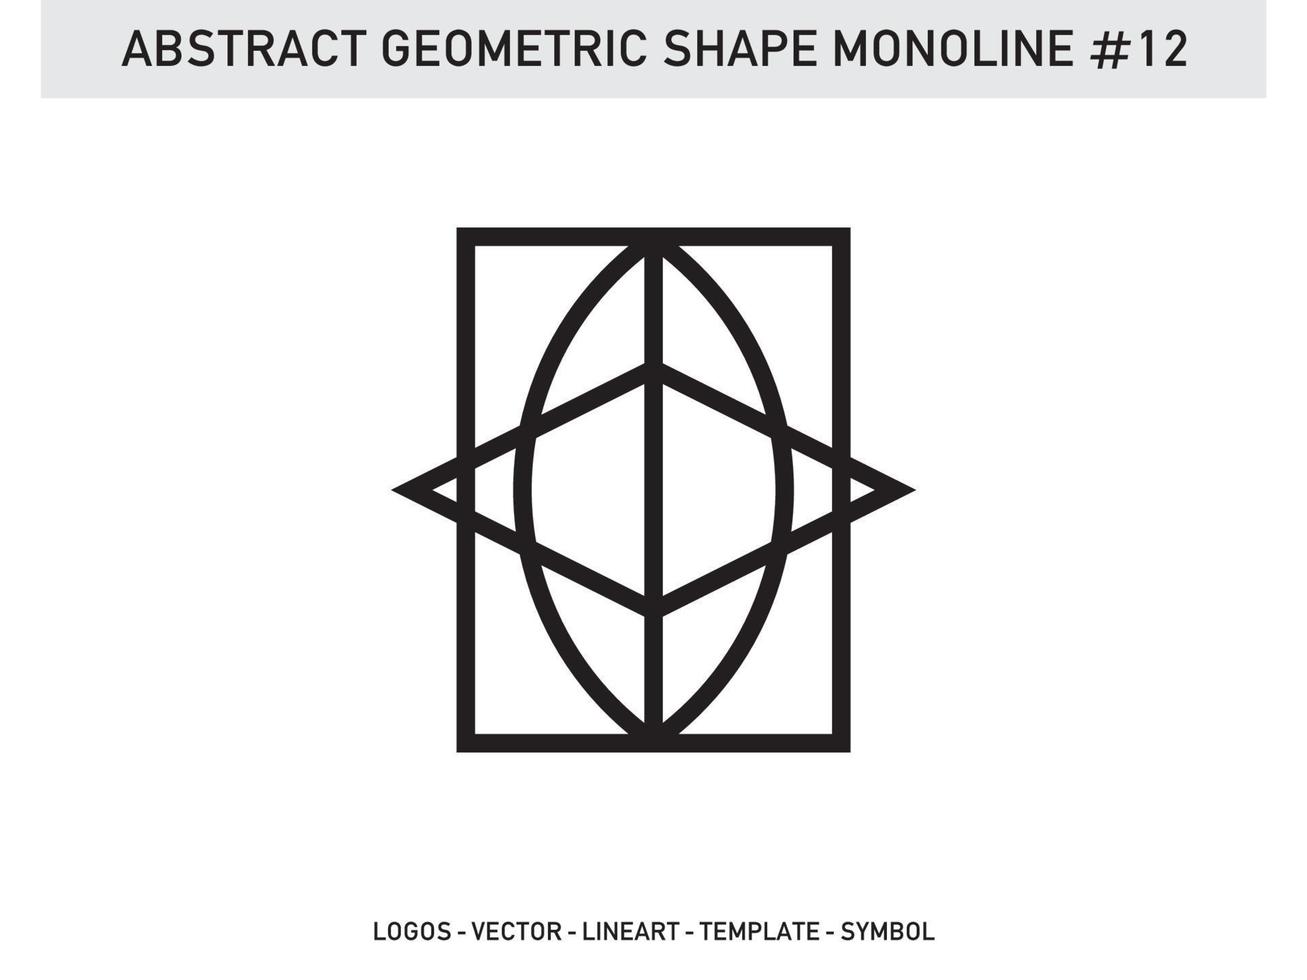 Lineart Monoline Abstract Geometric Shape Tile Design Free vector